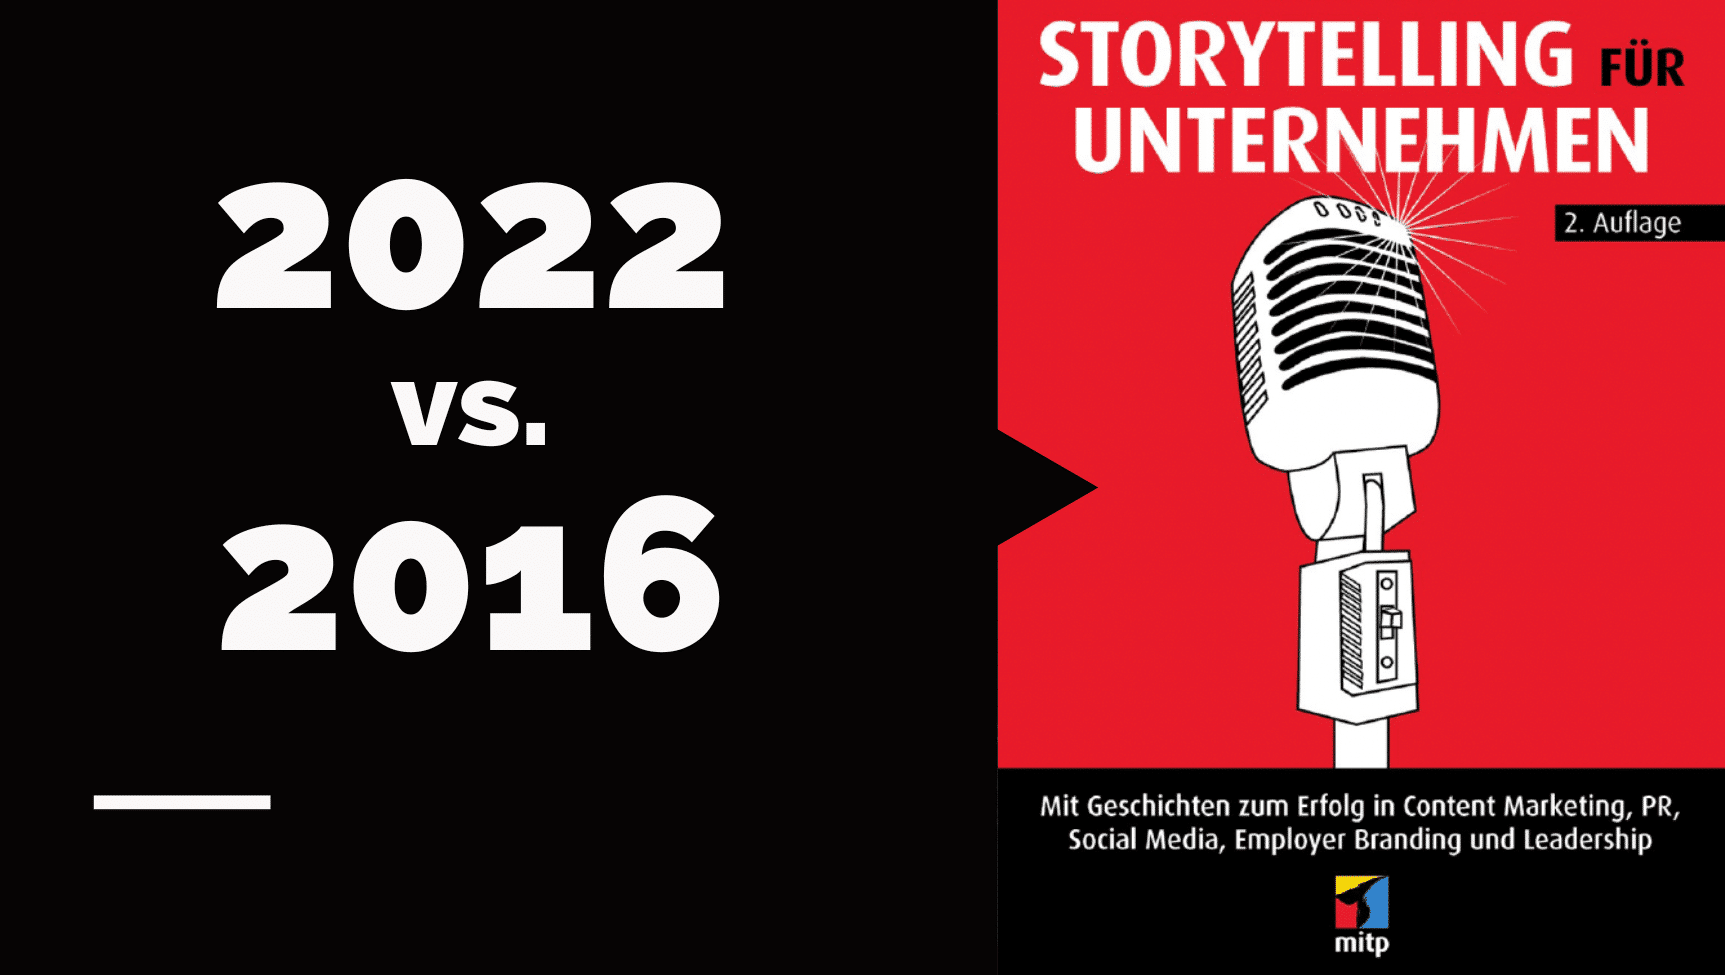 Storytelling fuer Unternehmen 2022 - Brand Storytelling in 2022